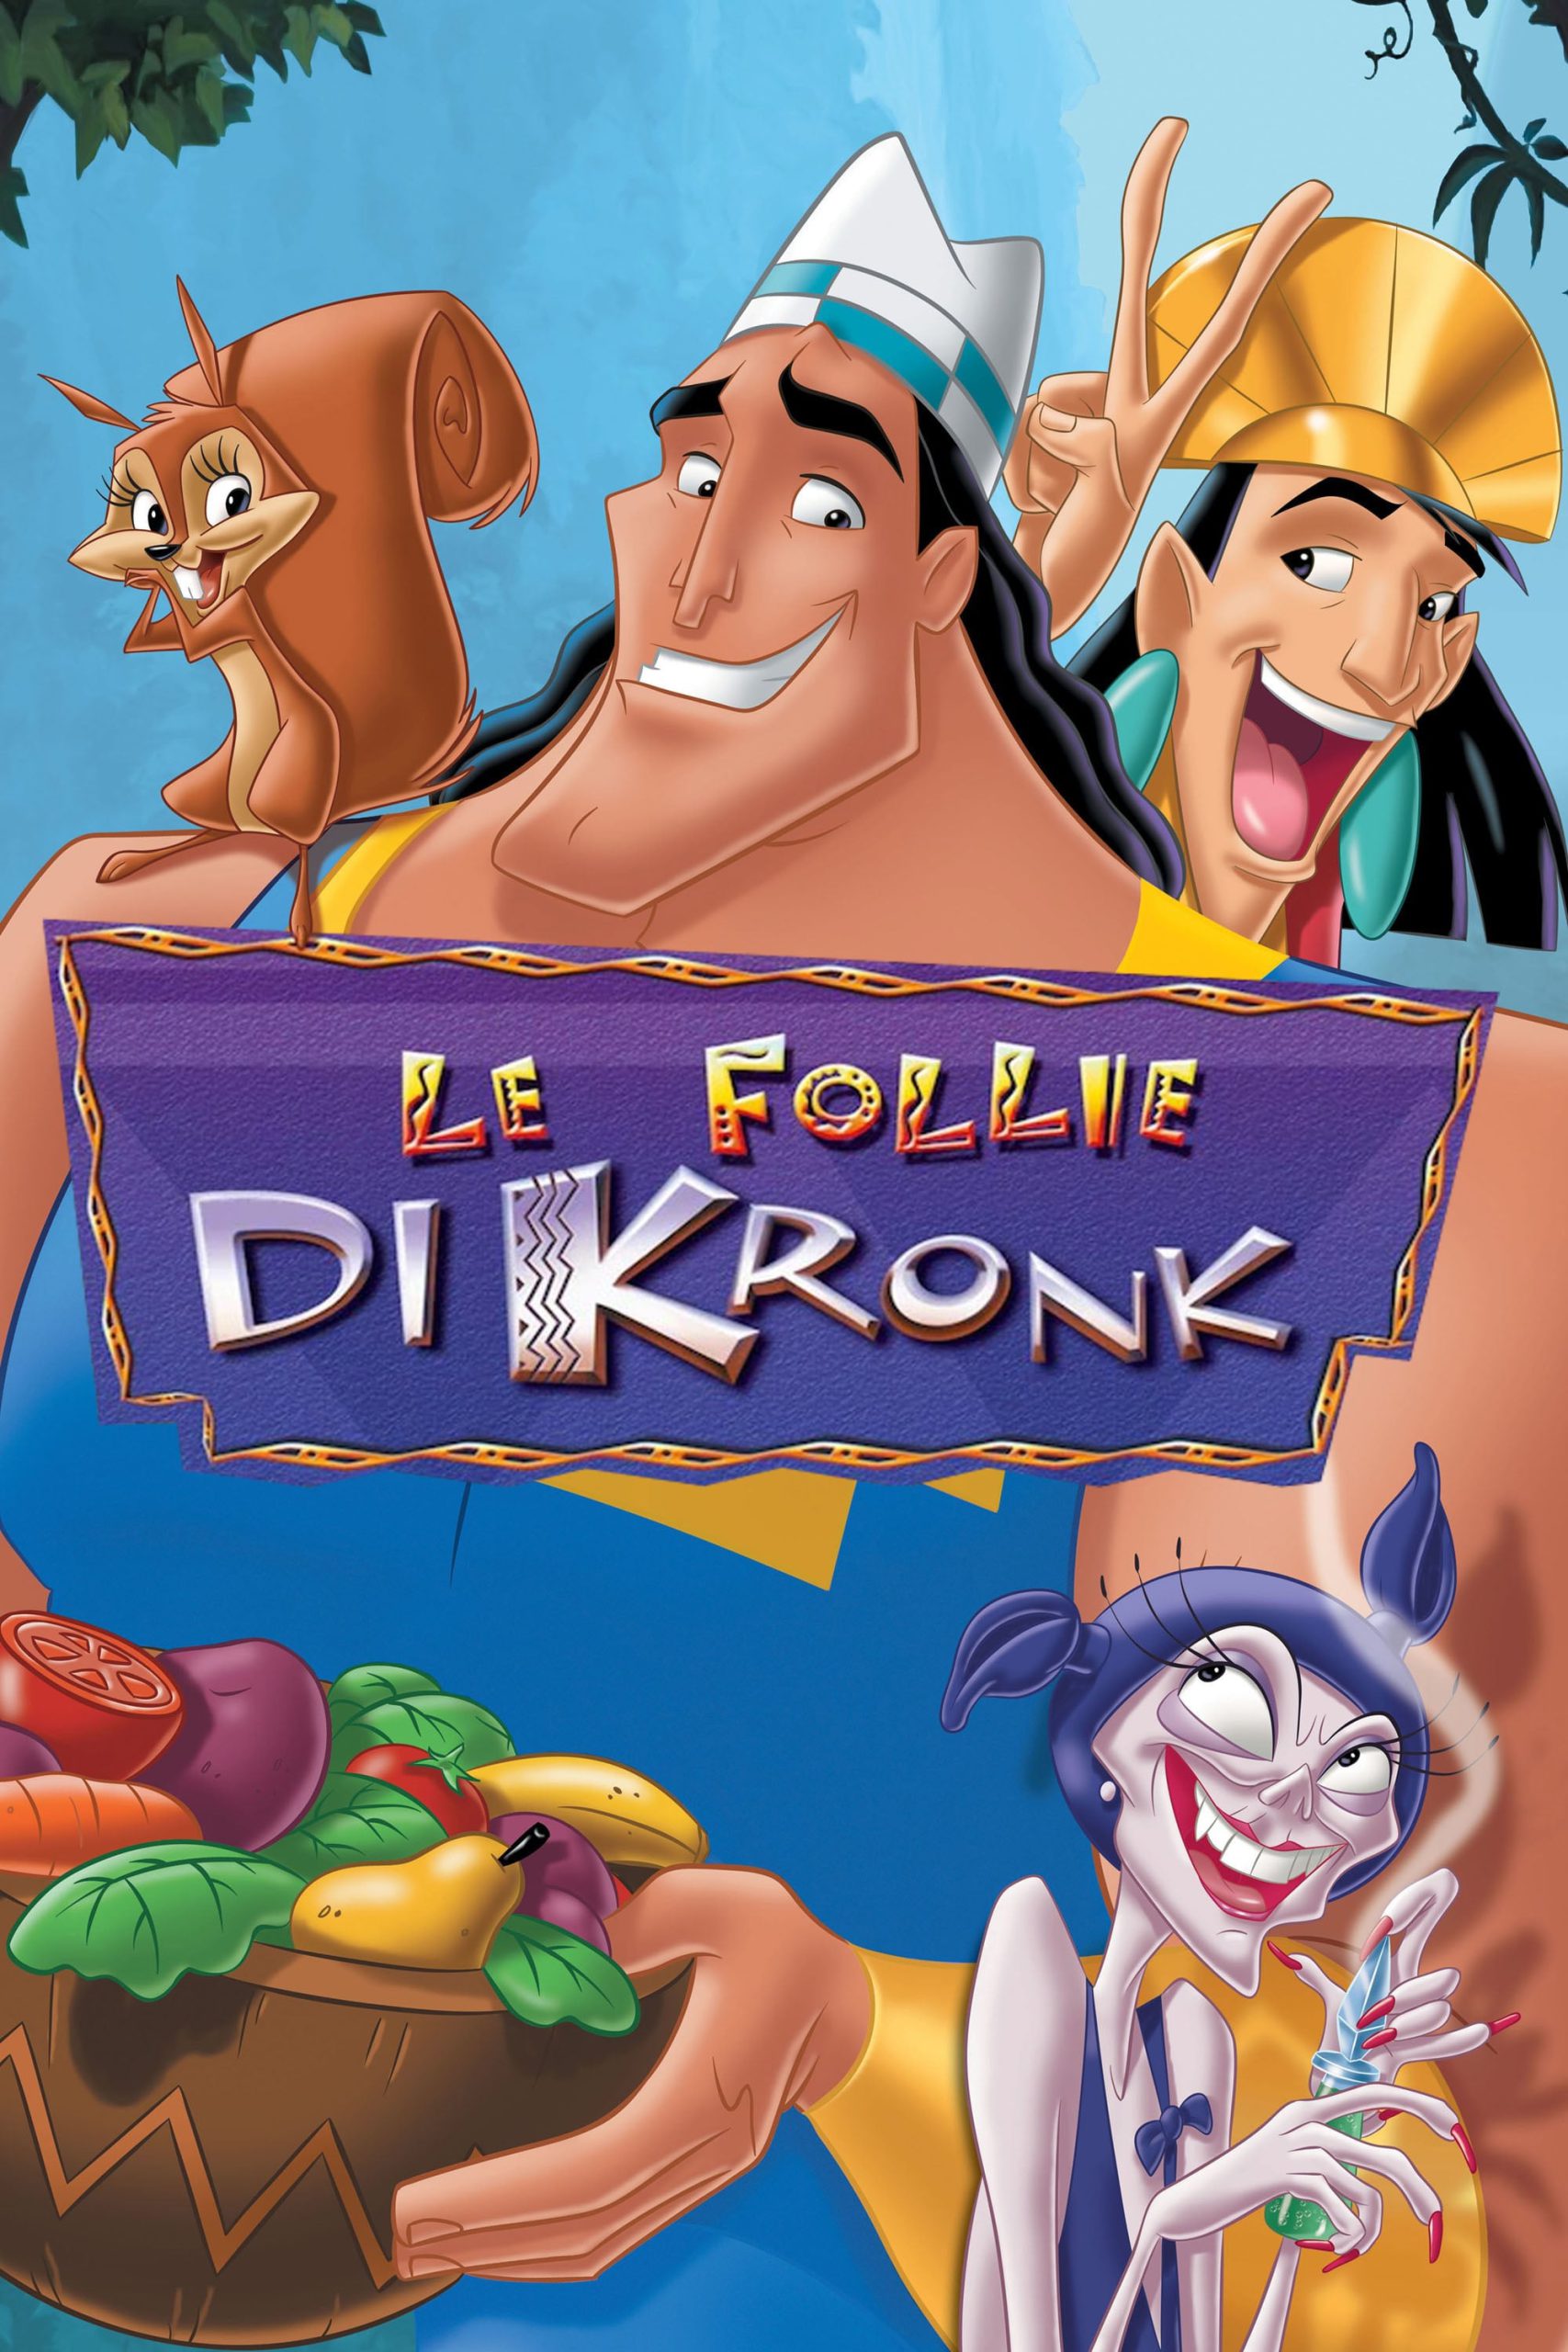 Le follie di Kronk [HD] (2005)